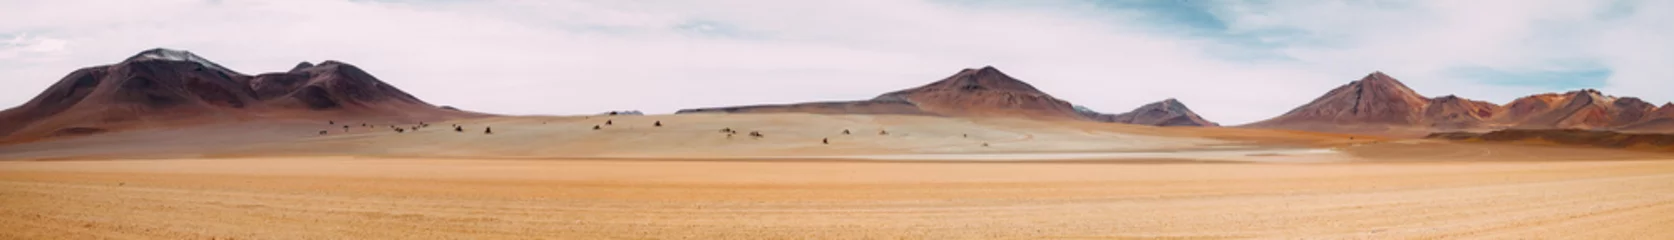 Washable wall murals Drought The vast expanse of nothingness - Atacama Desert - Bolivia